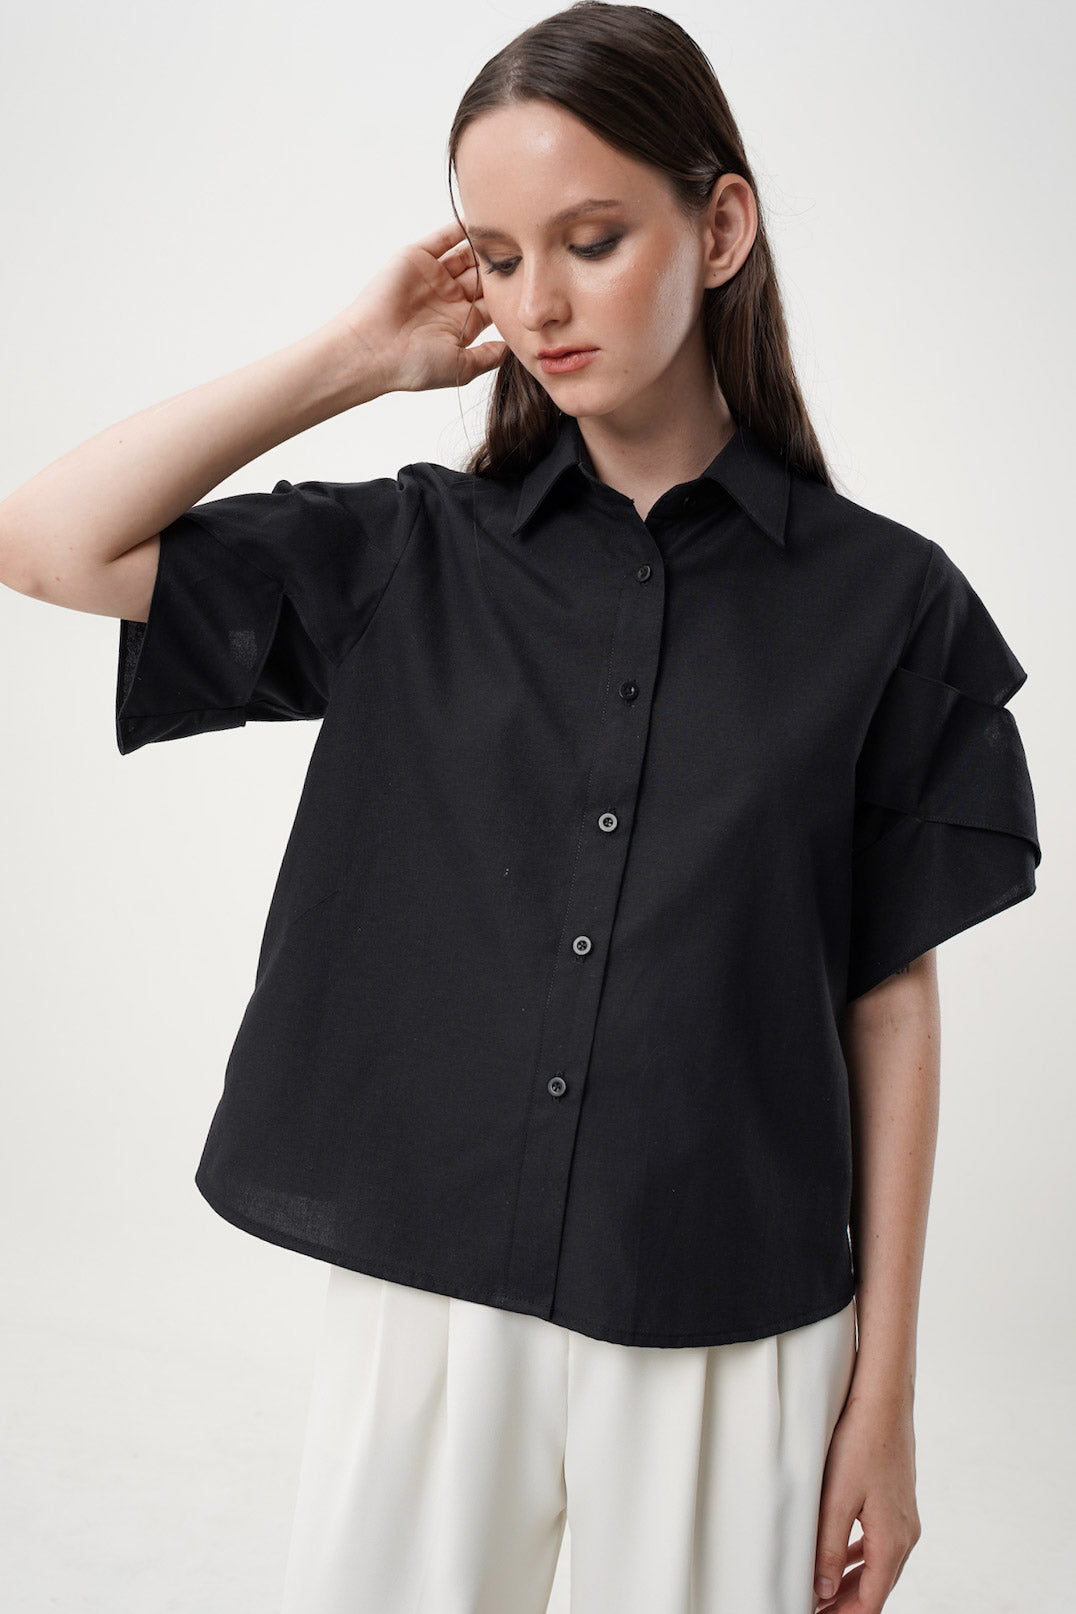 Eem Shirt in Black (3 LEFT)